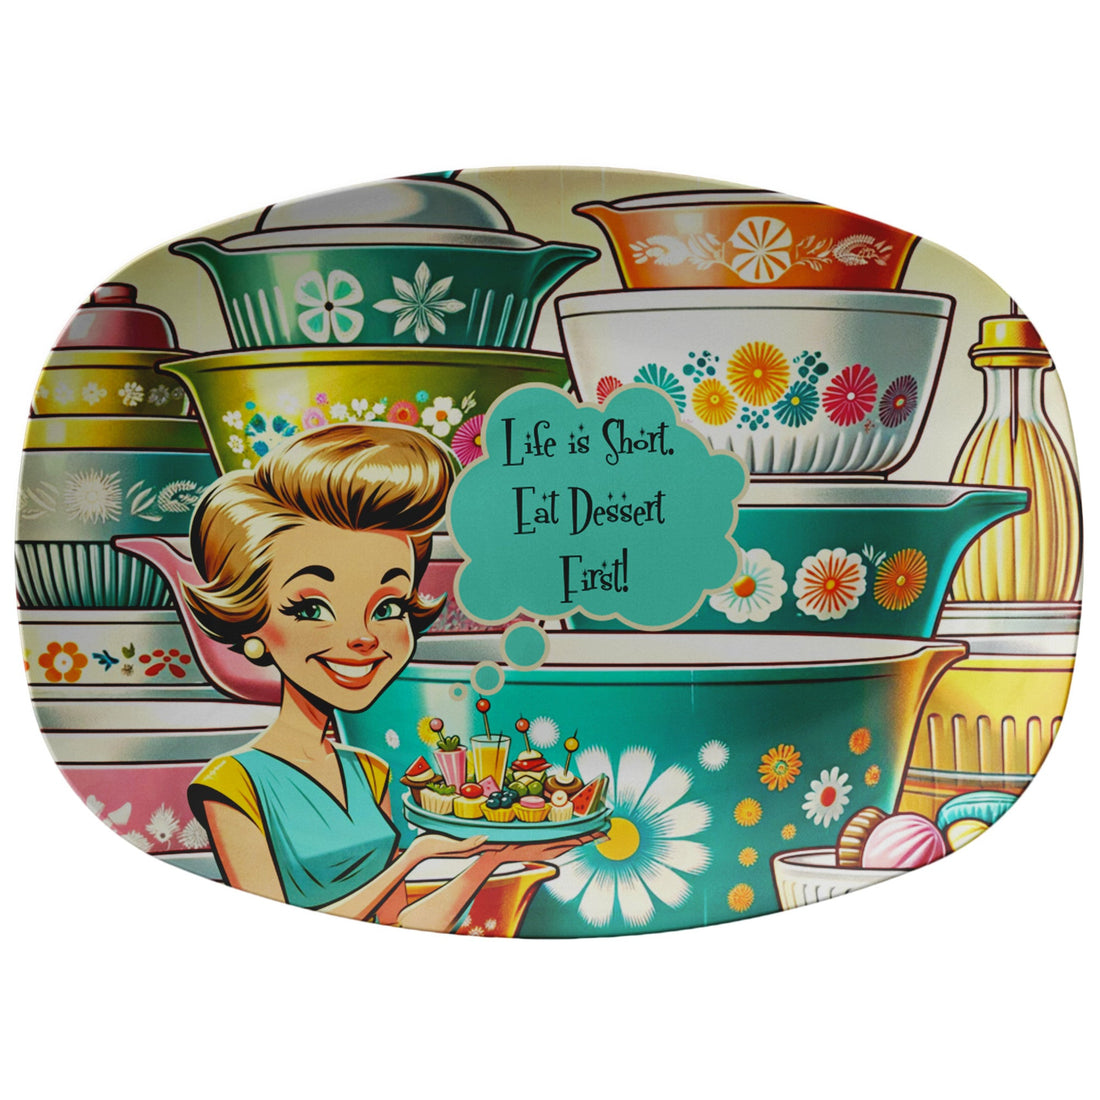 50s Kitschy Party Platter, Life Is Short, Eat Dessert First, Mid Century Modern Platter Kitchenware default